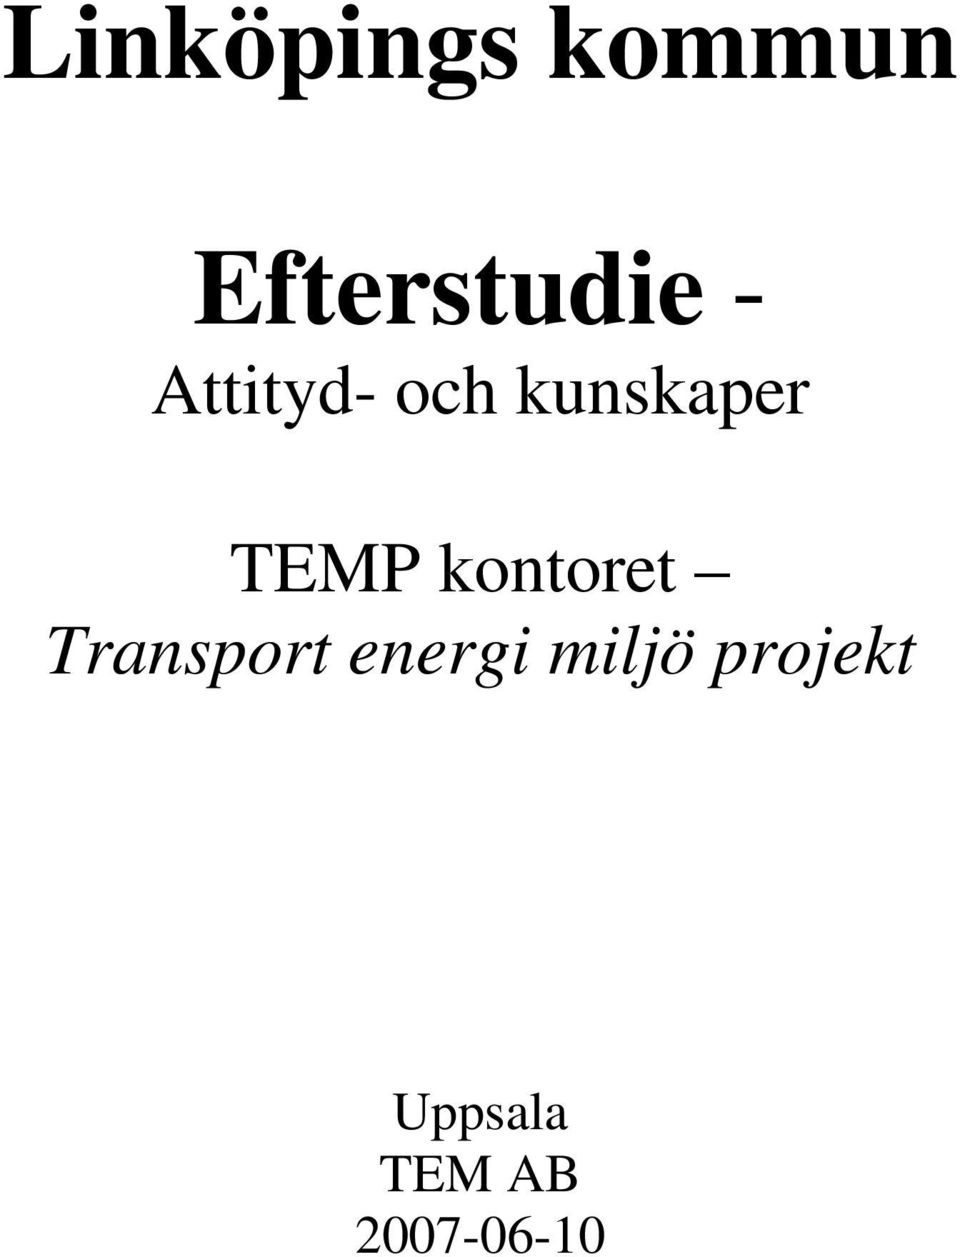 kontoret Transport energi miljö